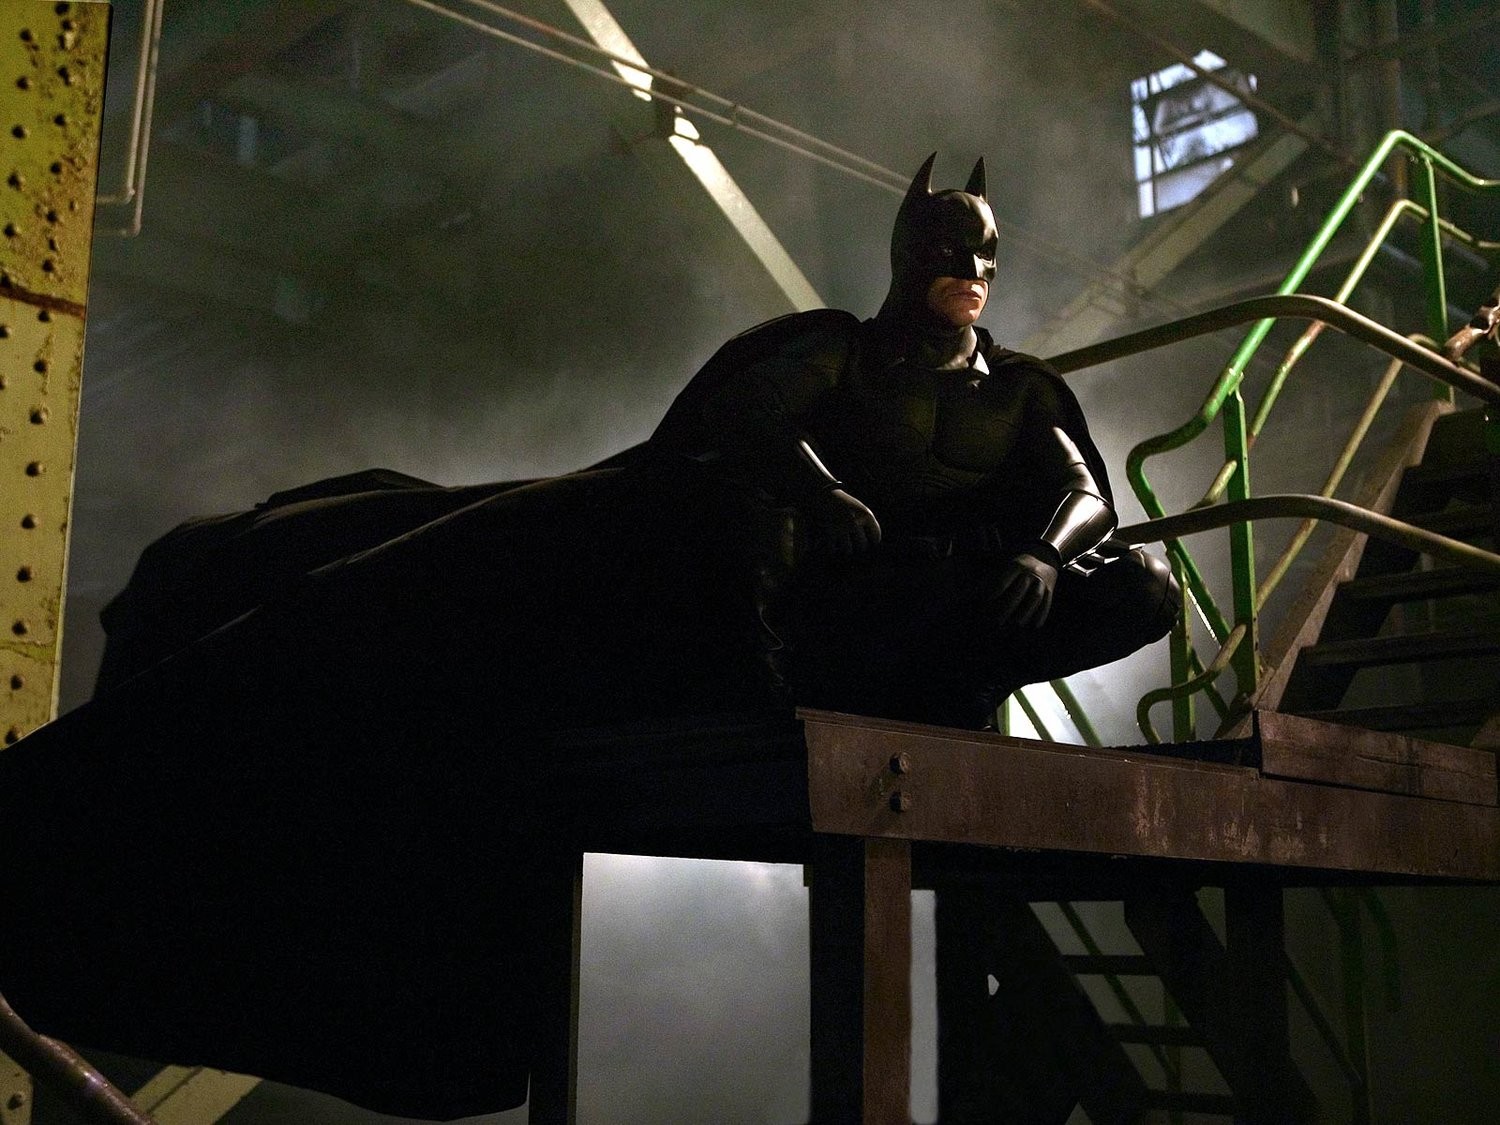 Christian Bale's Batman intimidates a thug in Arkham Asylum in Christopher Nolan's Batman Begins